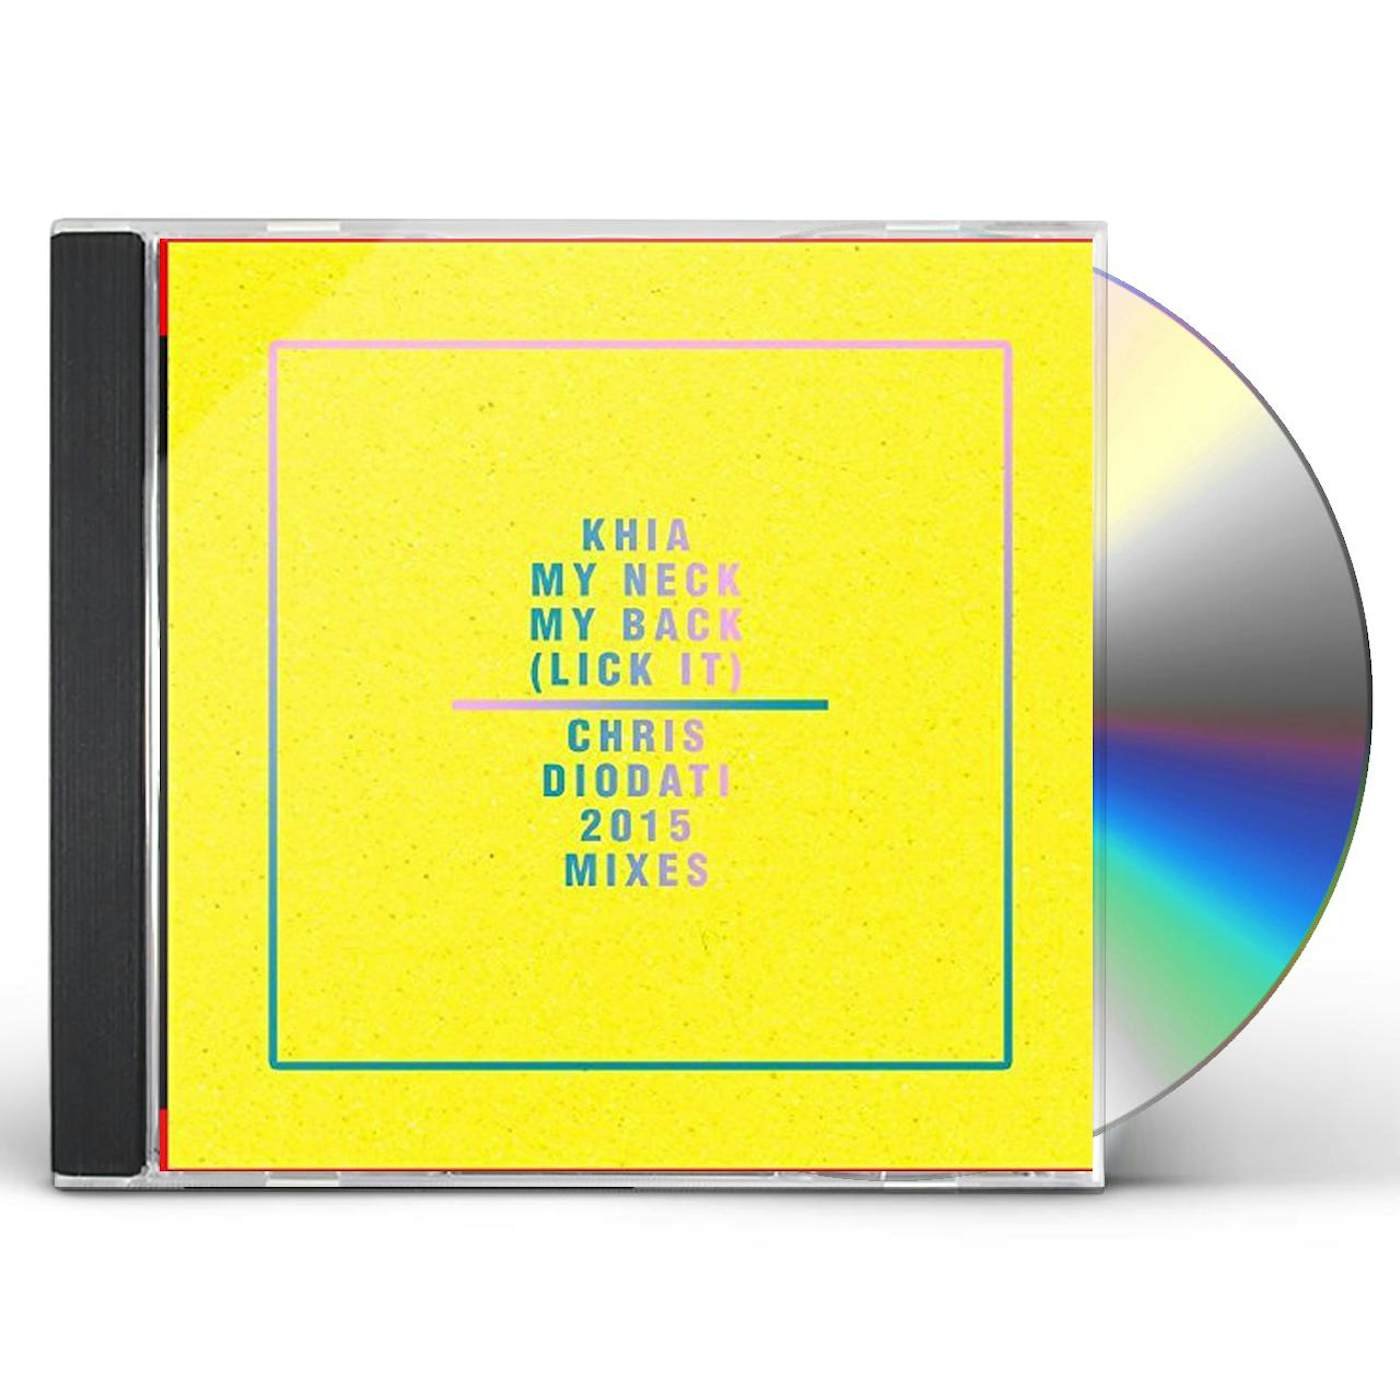 Khia MY NECK MY BACK (LICK IT) - CHRIS DIODATI 2015 MIX CD